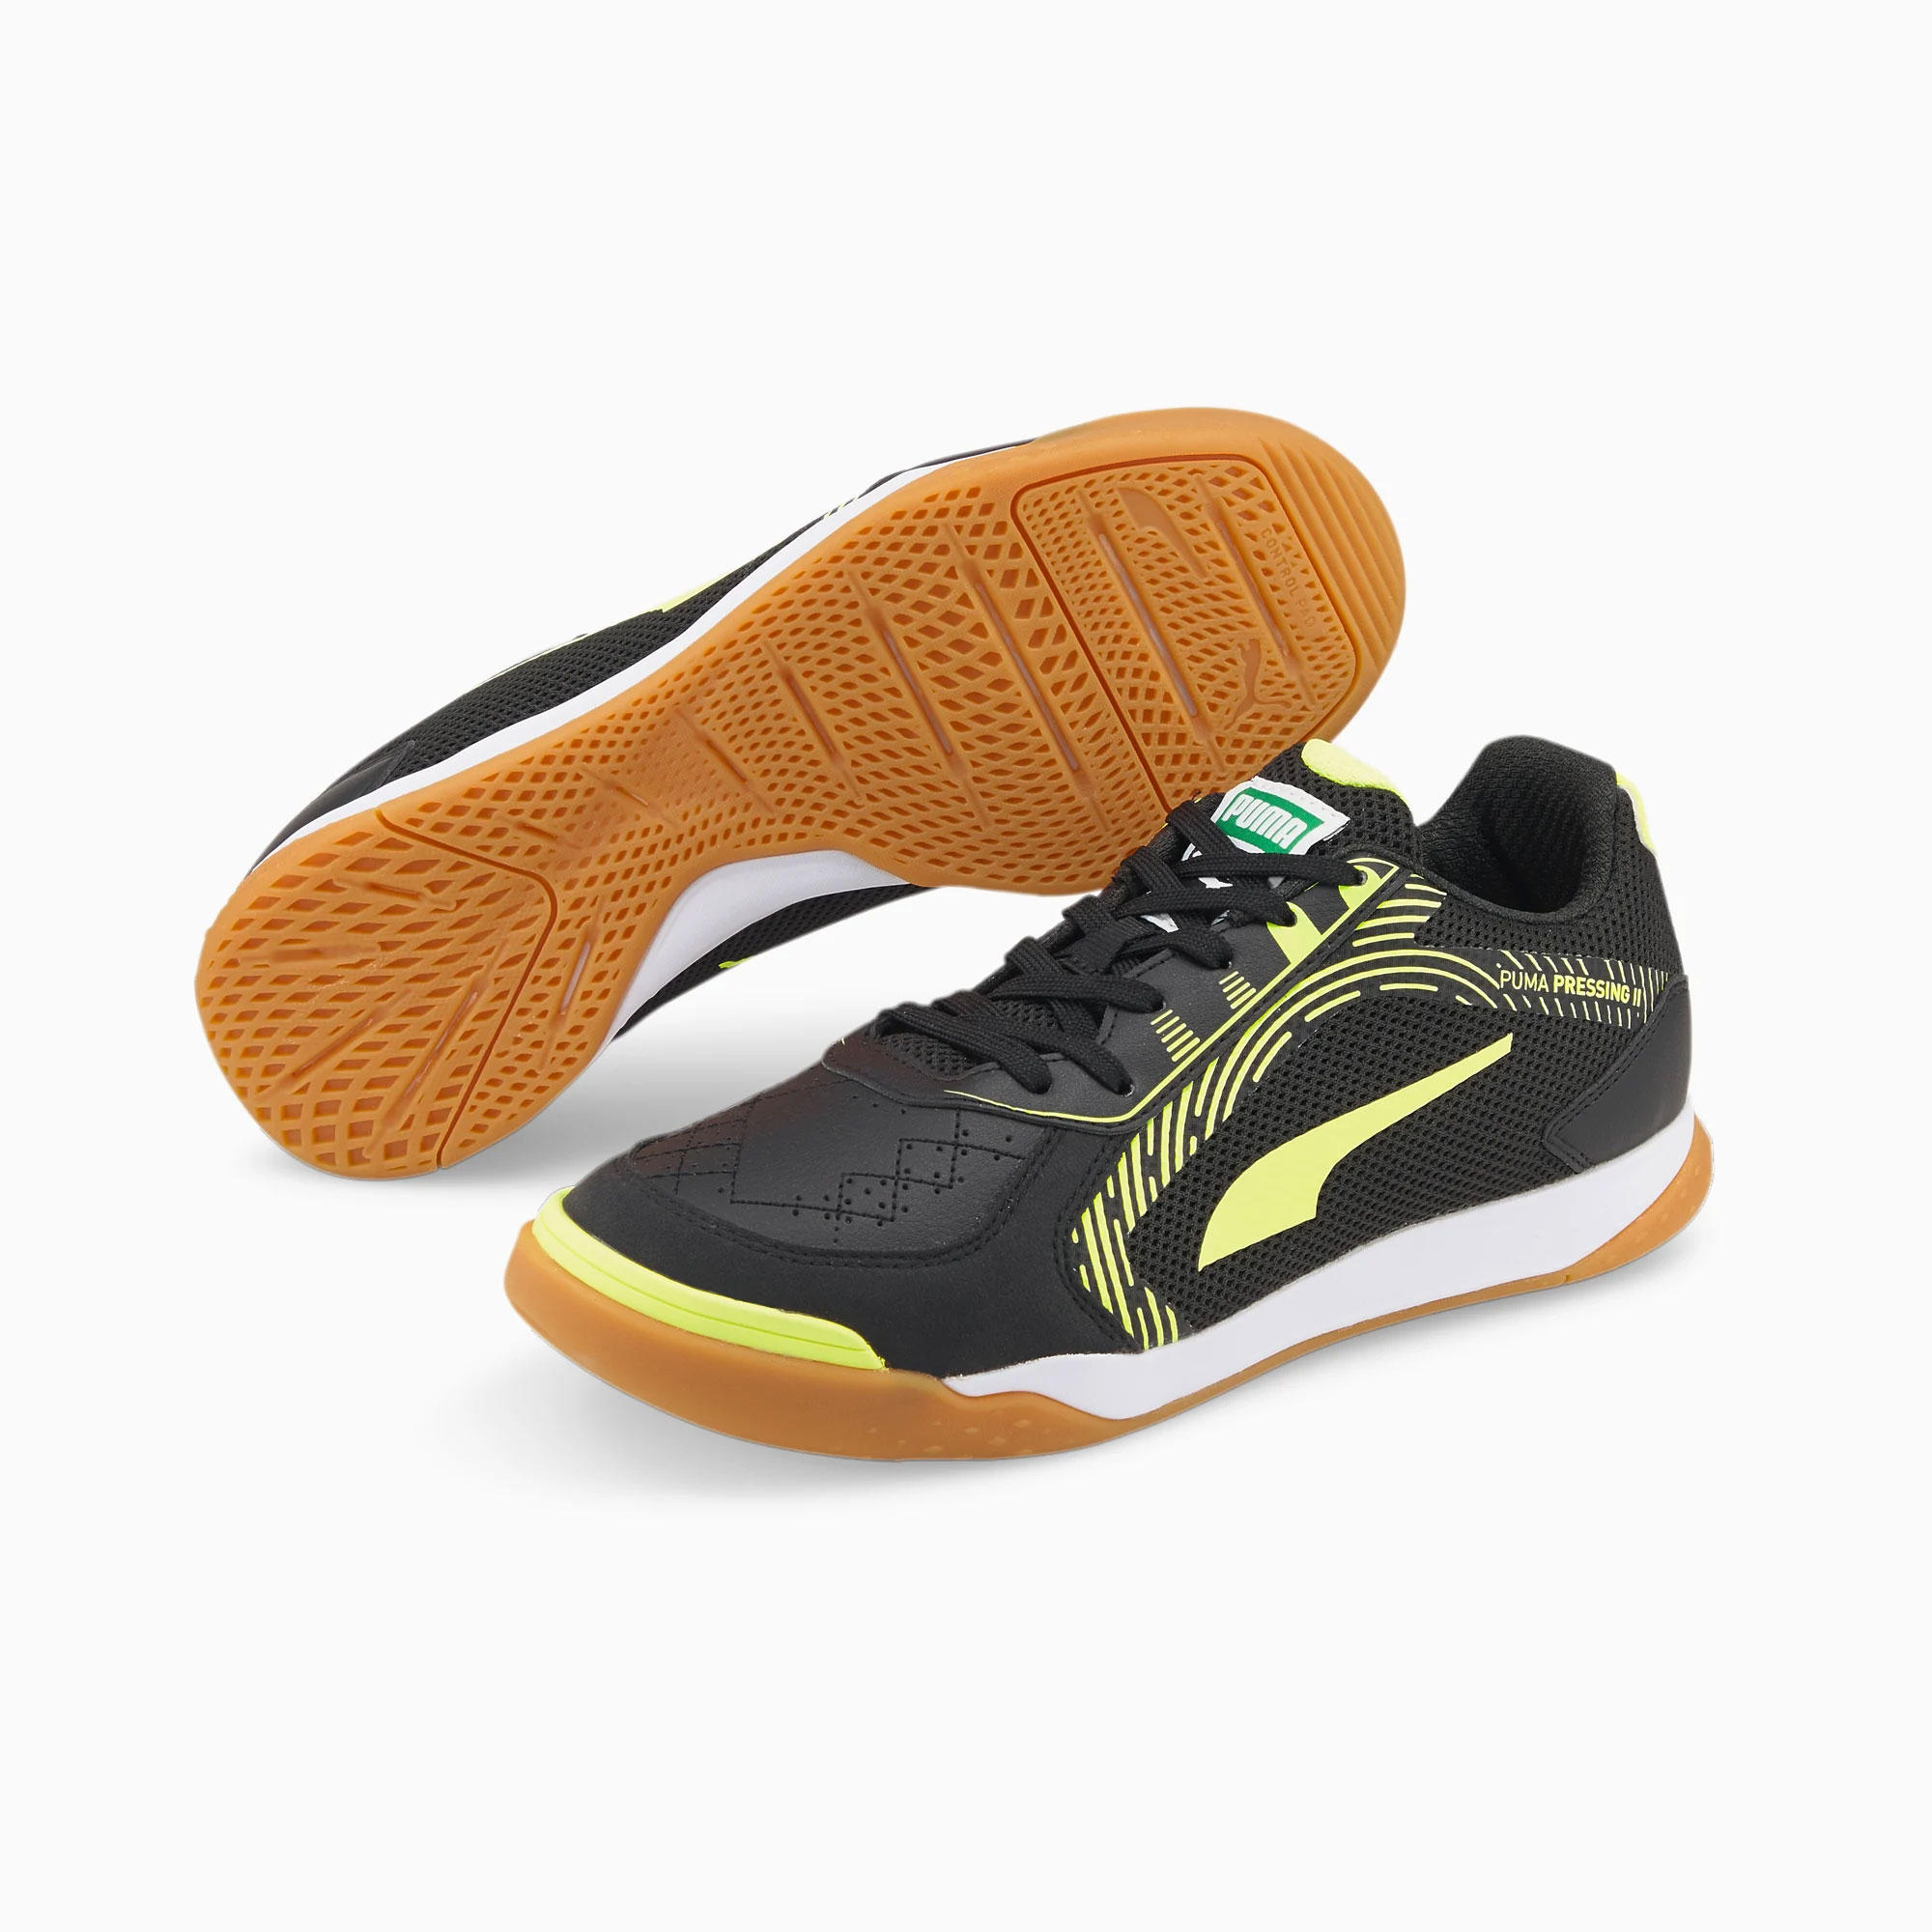 :Puma Pressing II Indoor Soccer Shoes - Puma Black /  Yellow Alert / Puma White / Gum